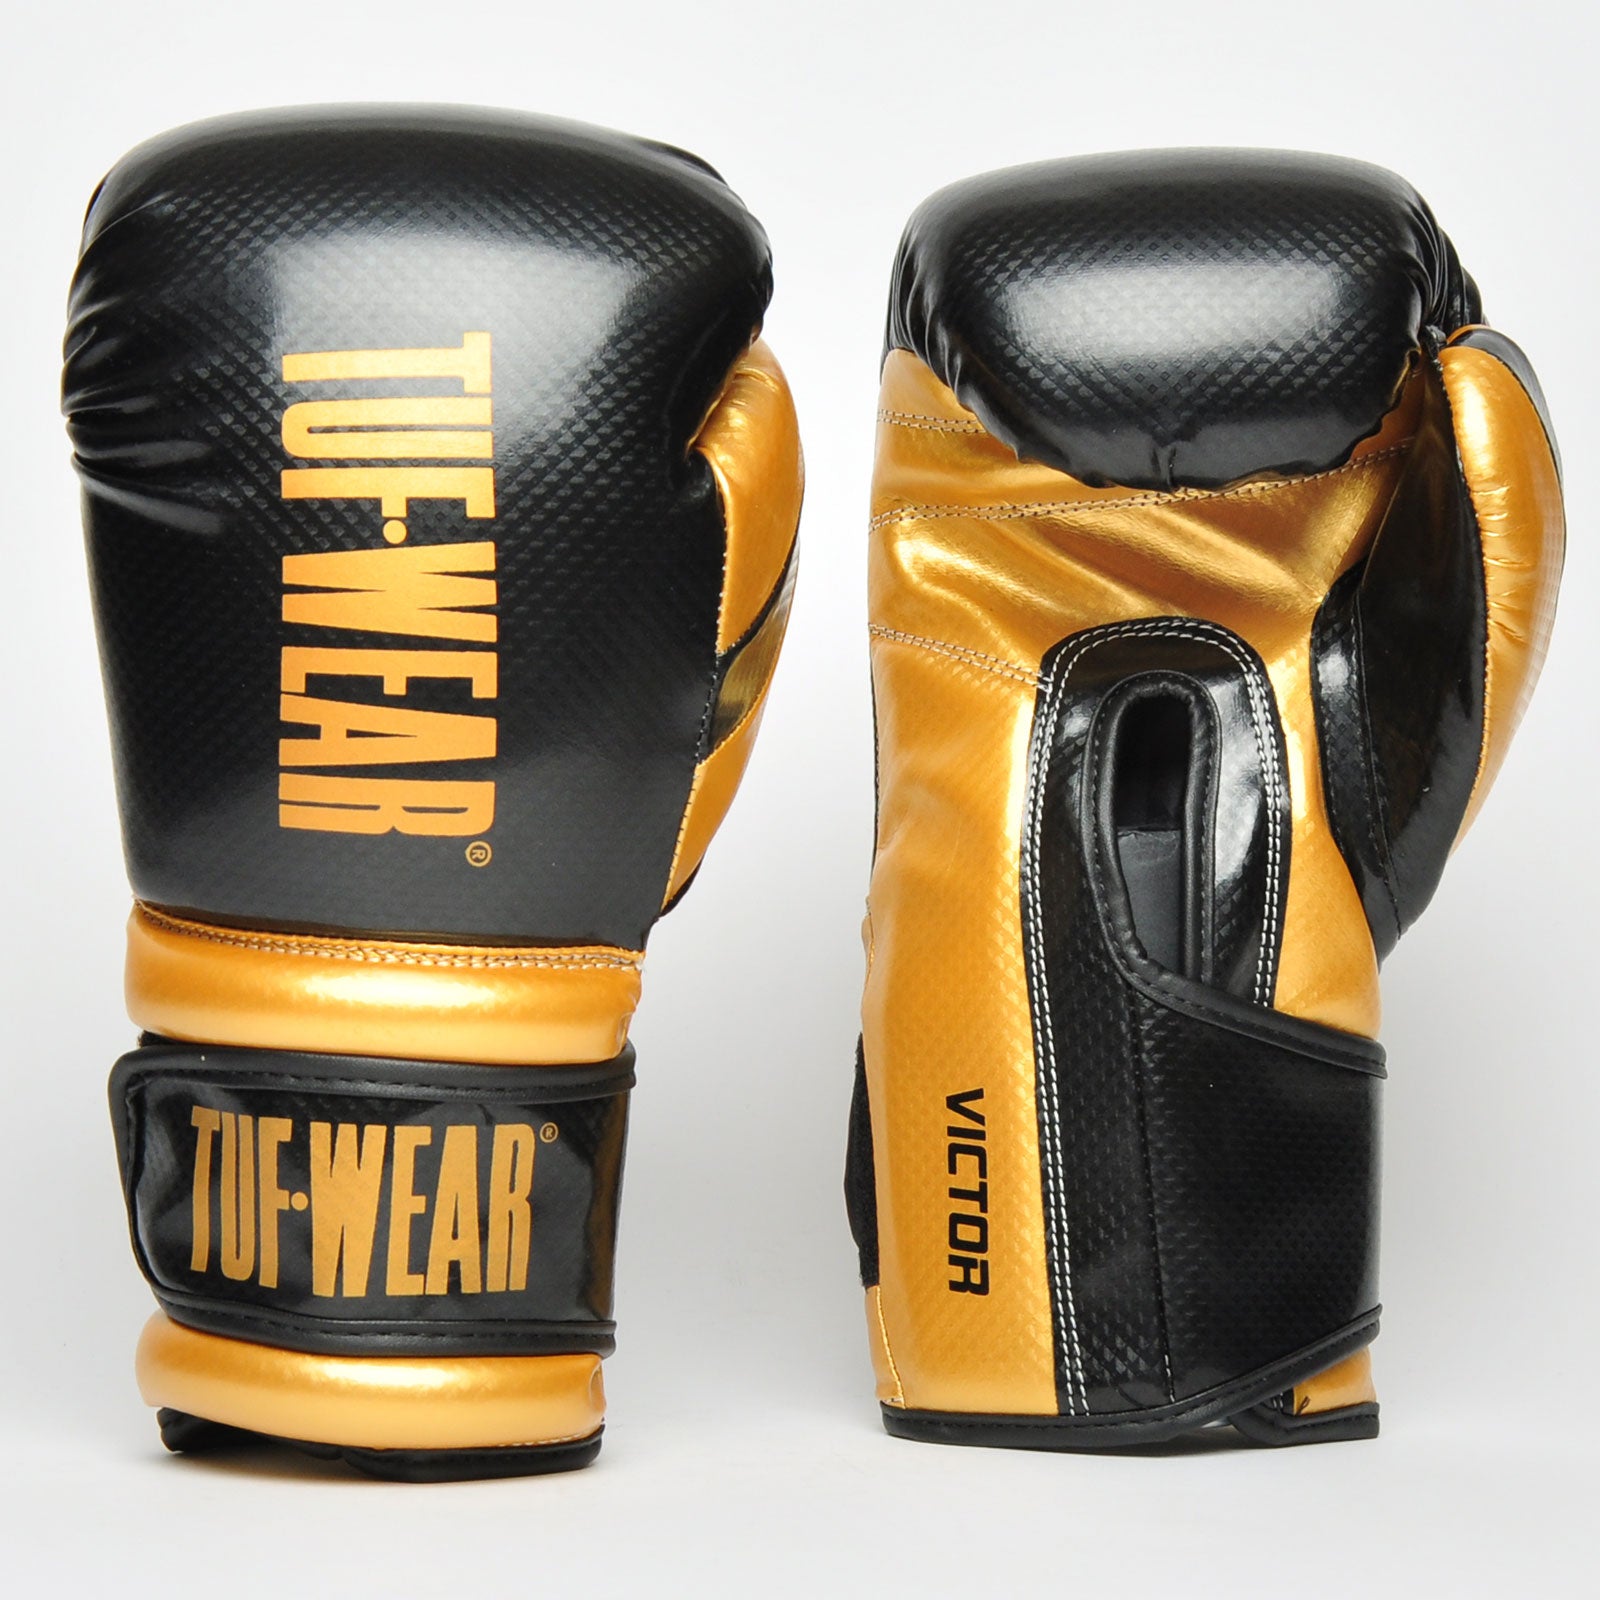 Buy TUF-WEAR Victor Training Glove Black/Gold